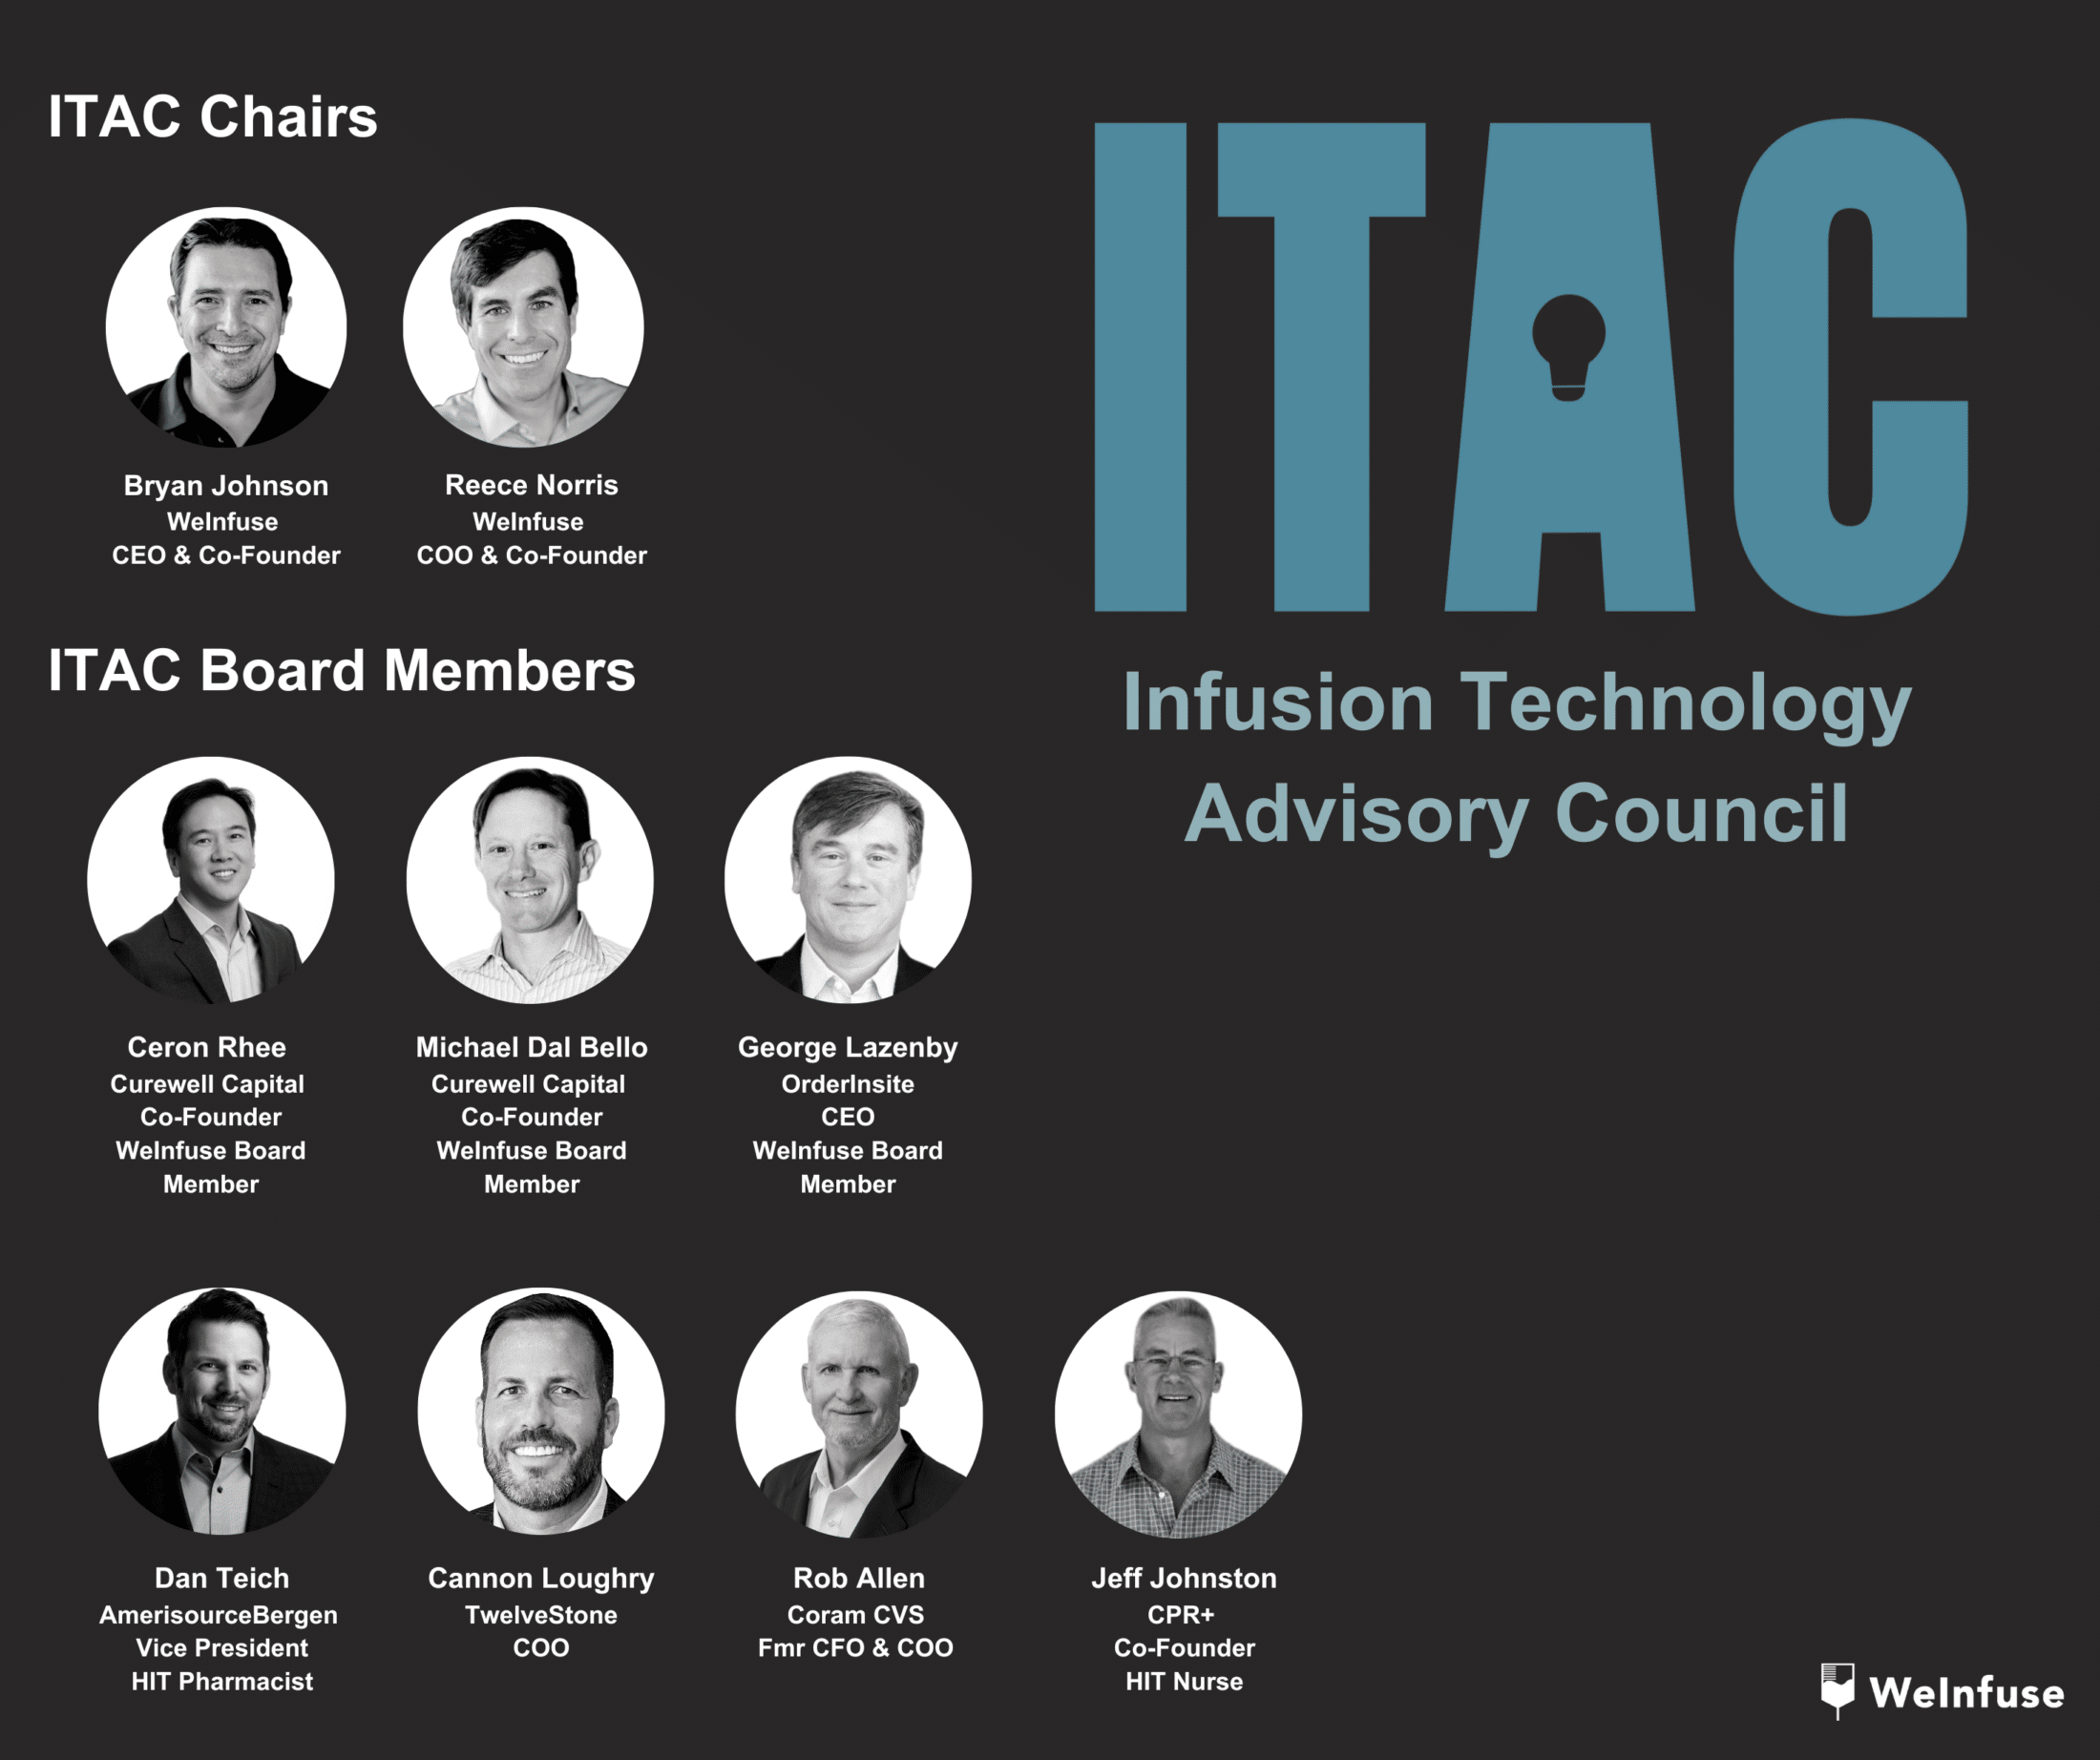 Infusion Technology Advisory Council